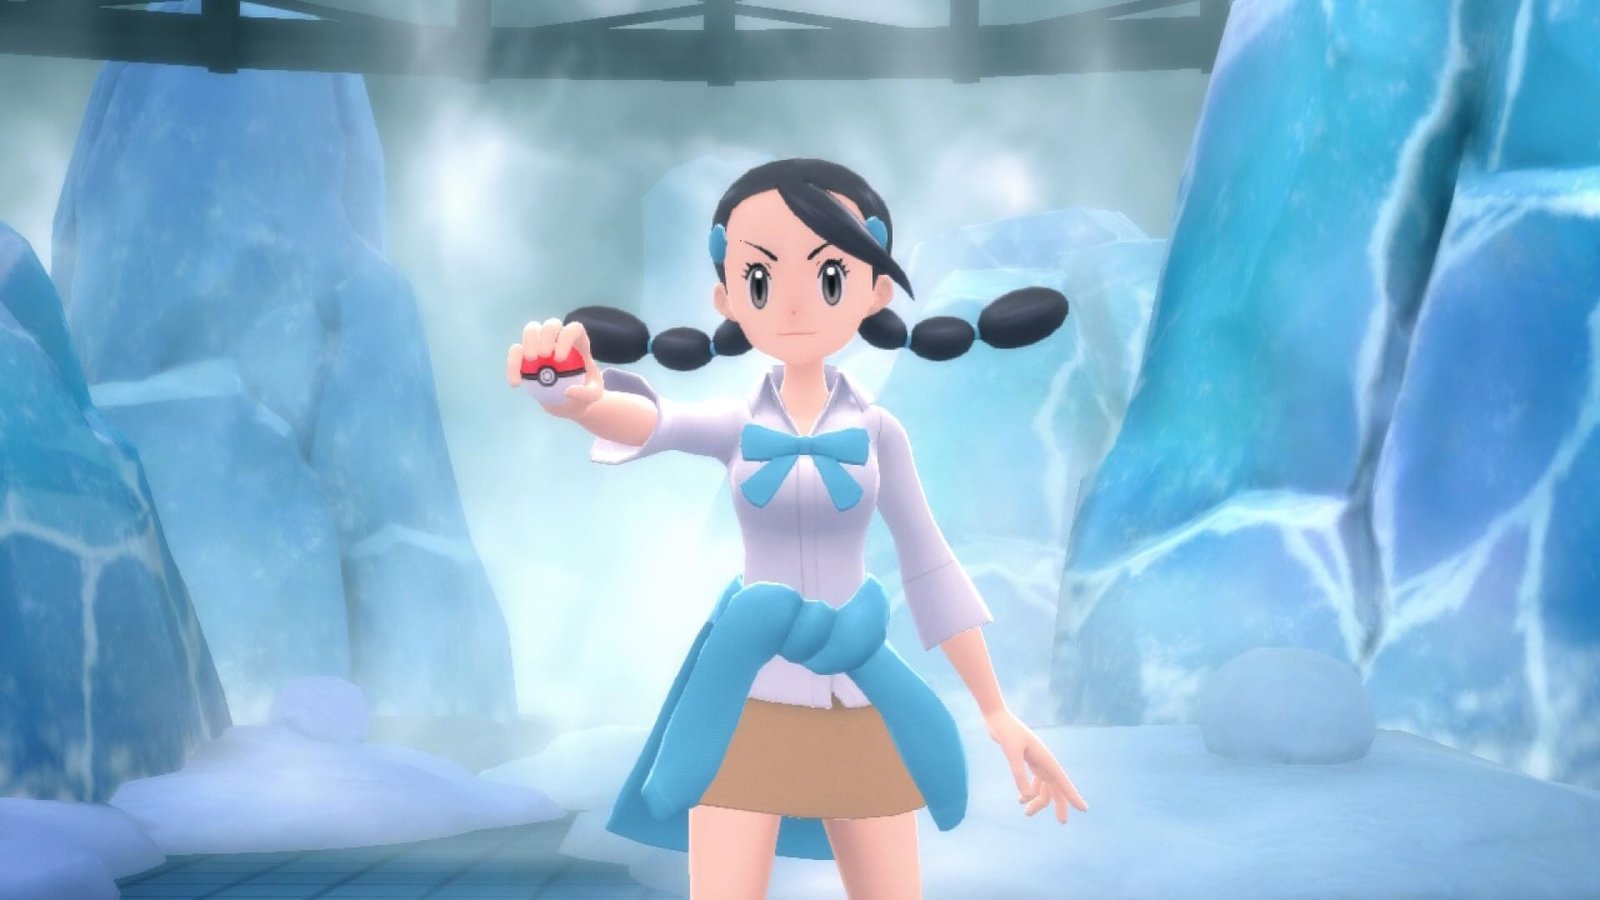 Nuzlocke #25: Entrando numa fria em Pokémon Shining Pearl